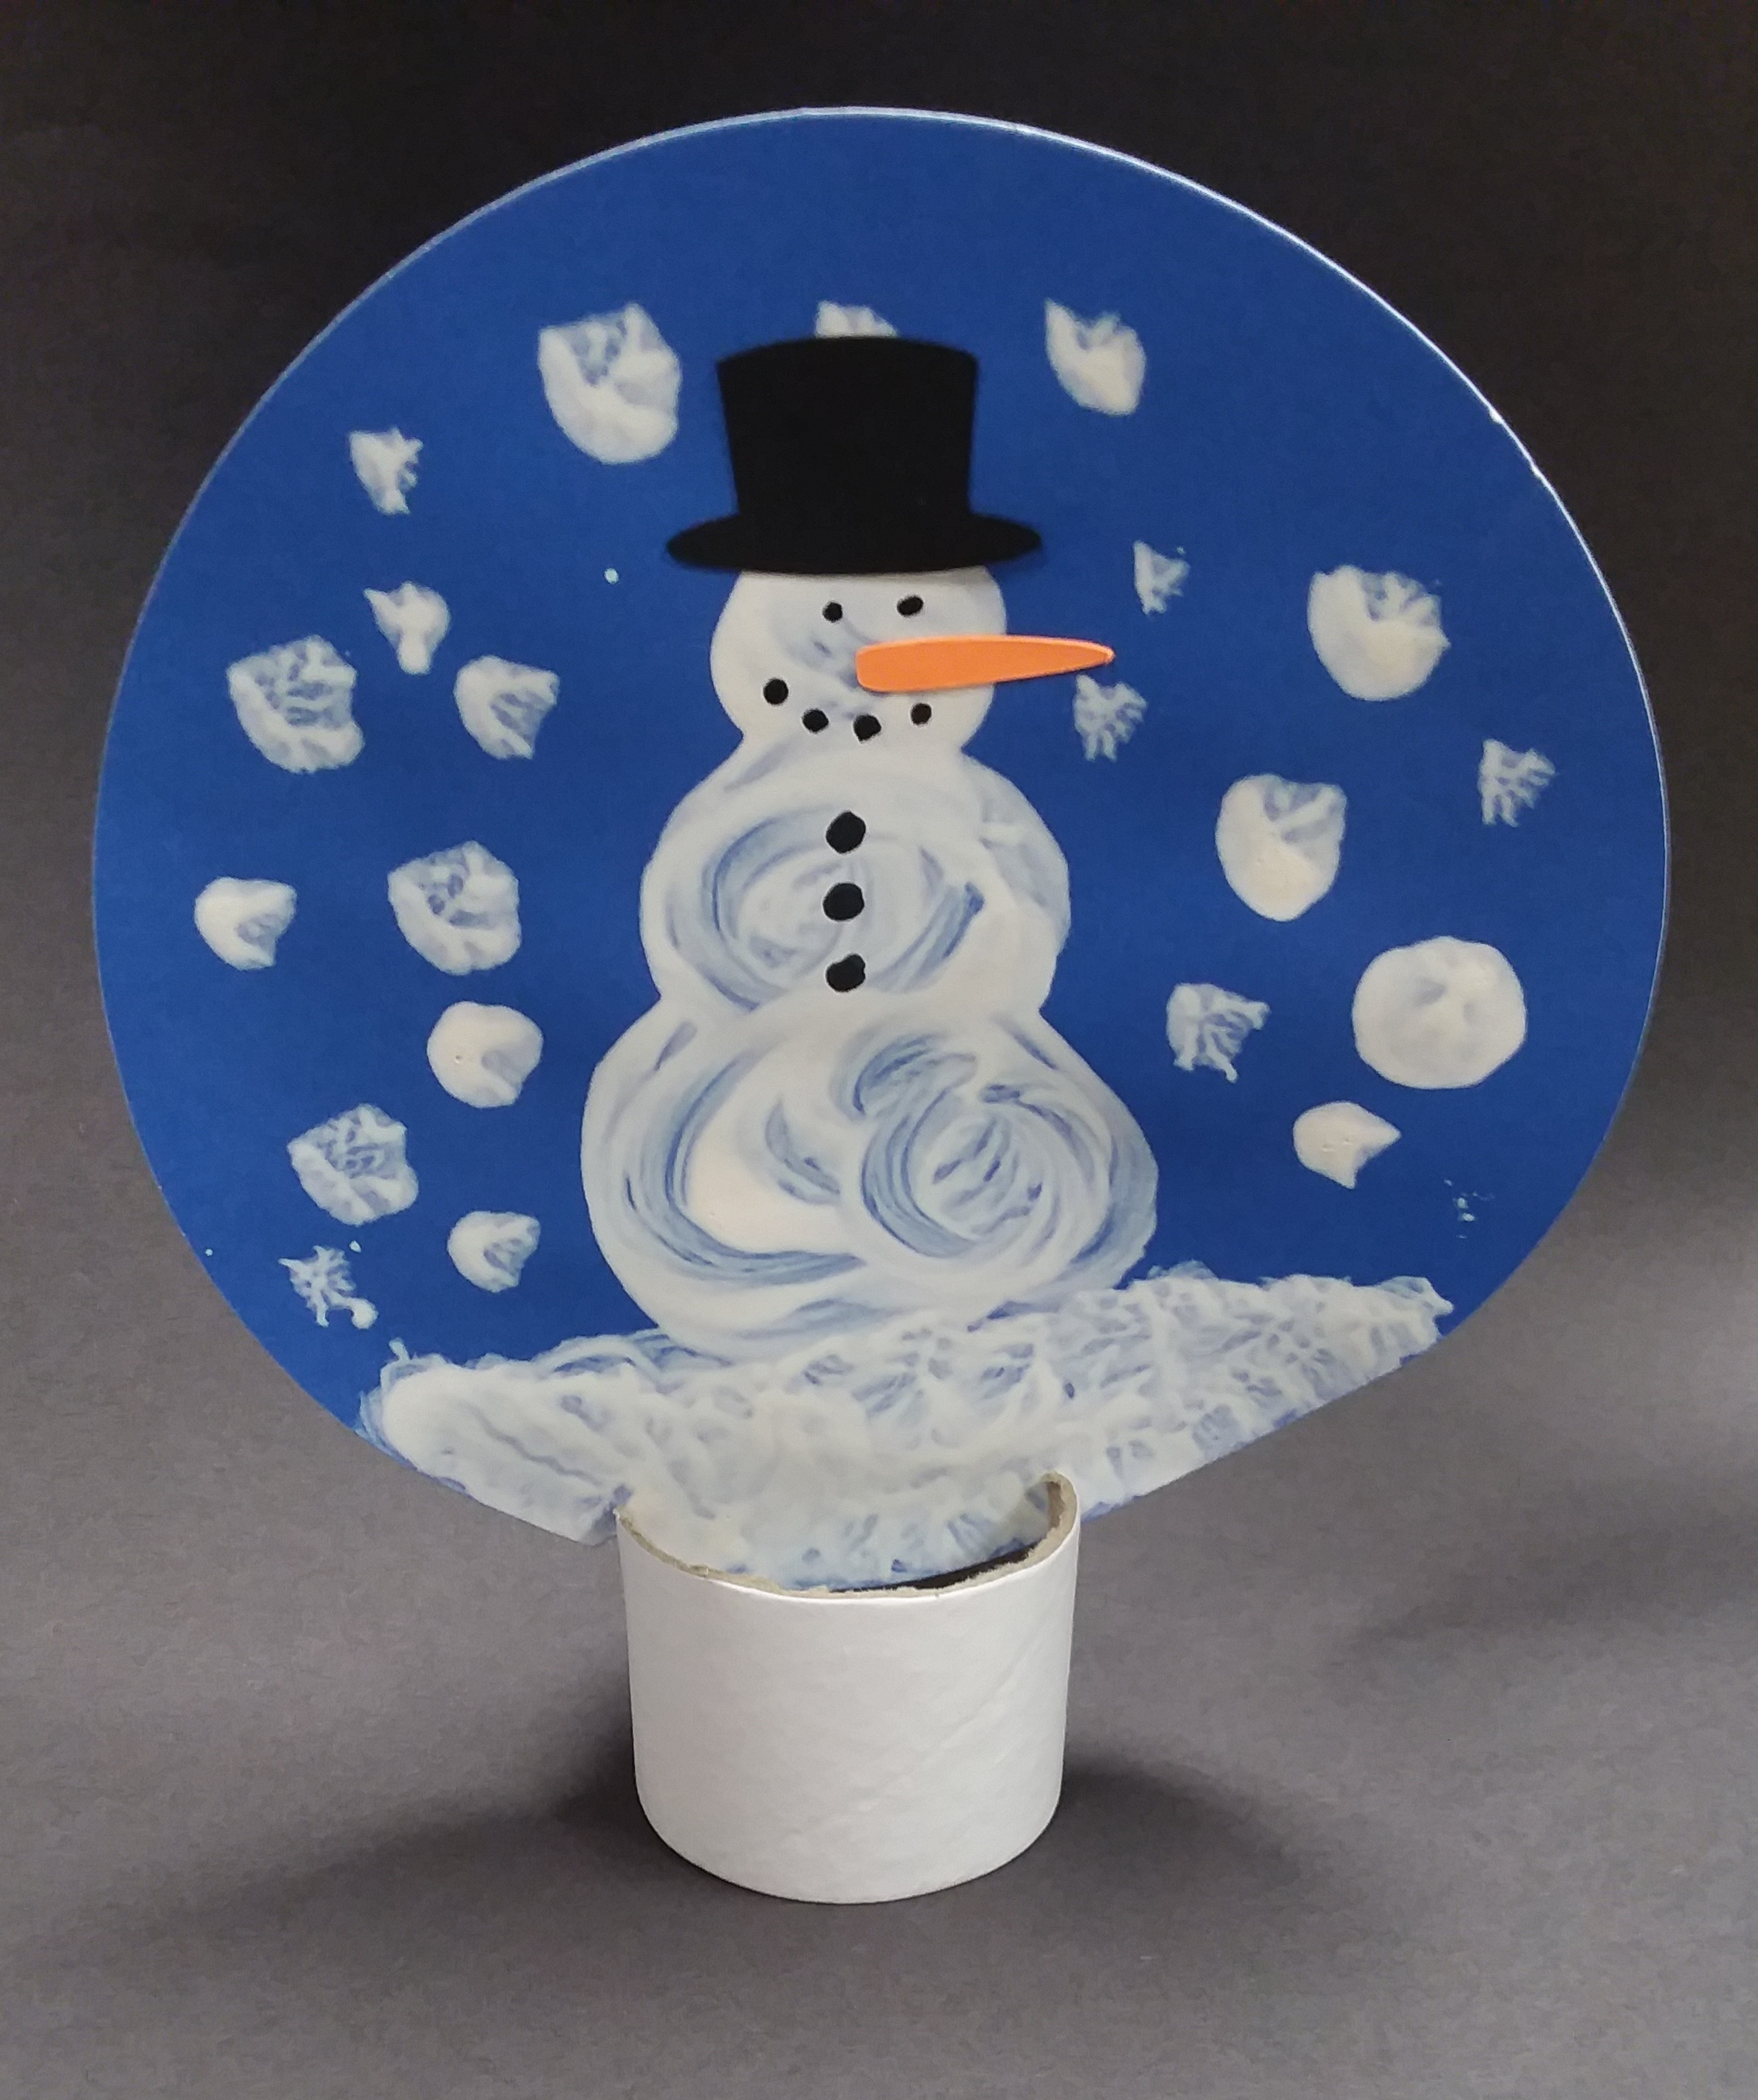 Paper snow globe craft example